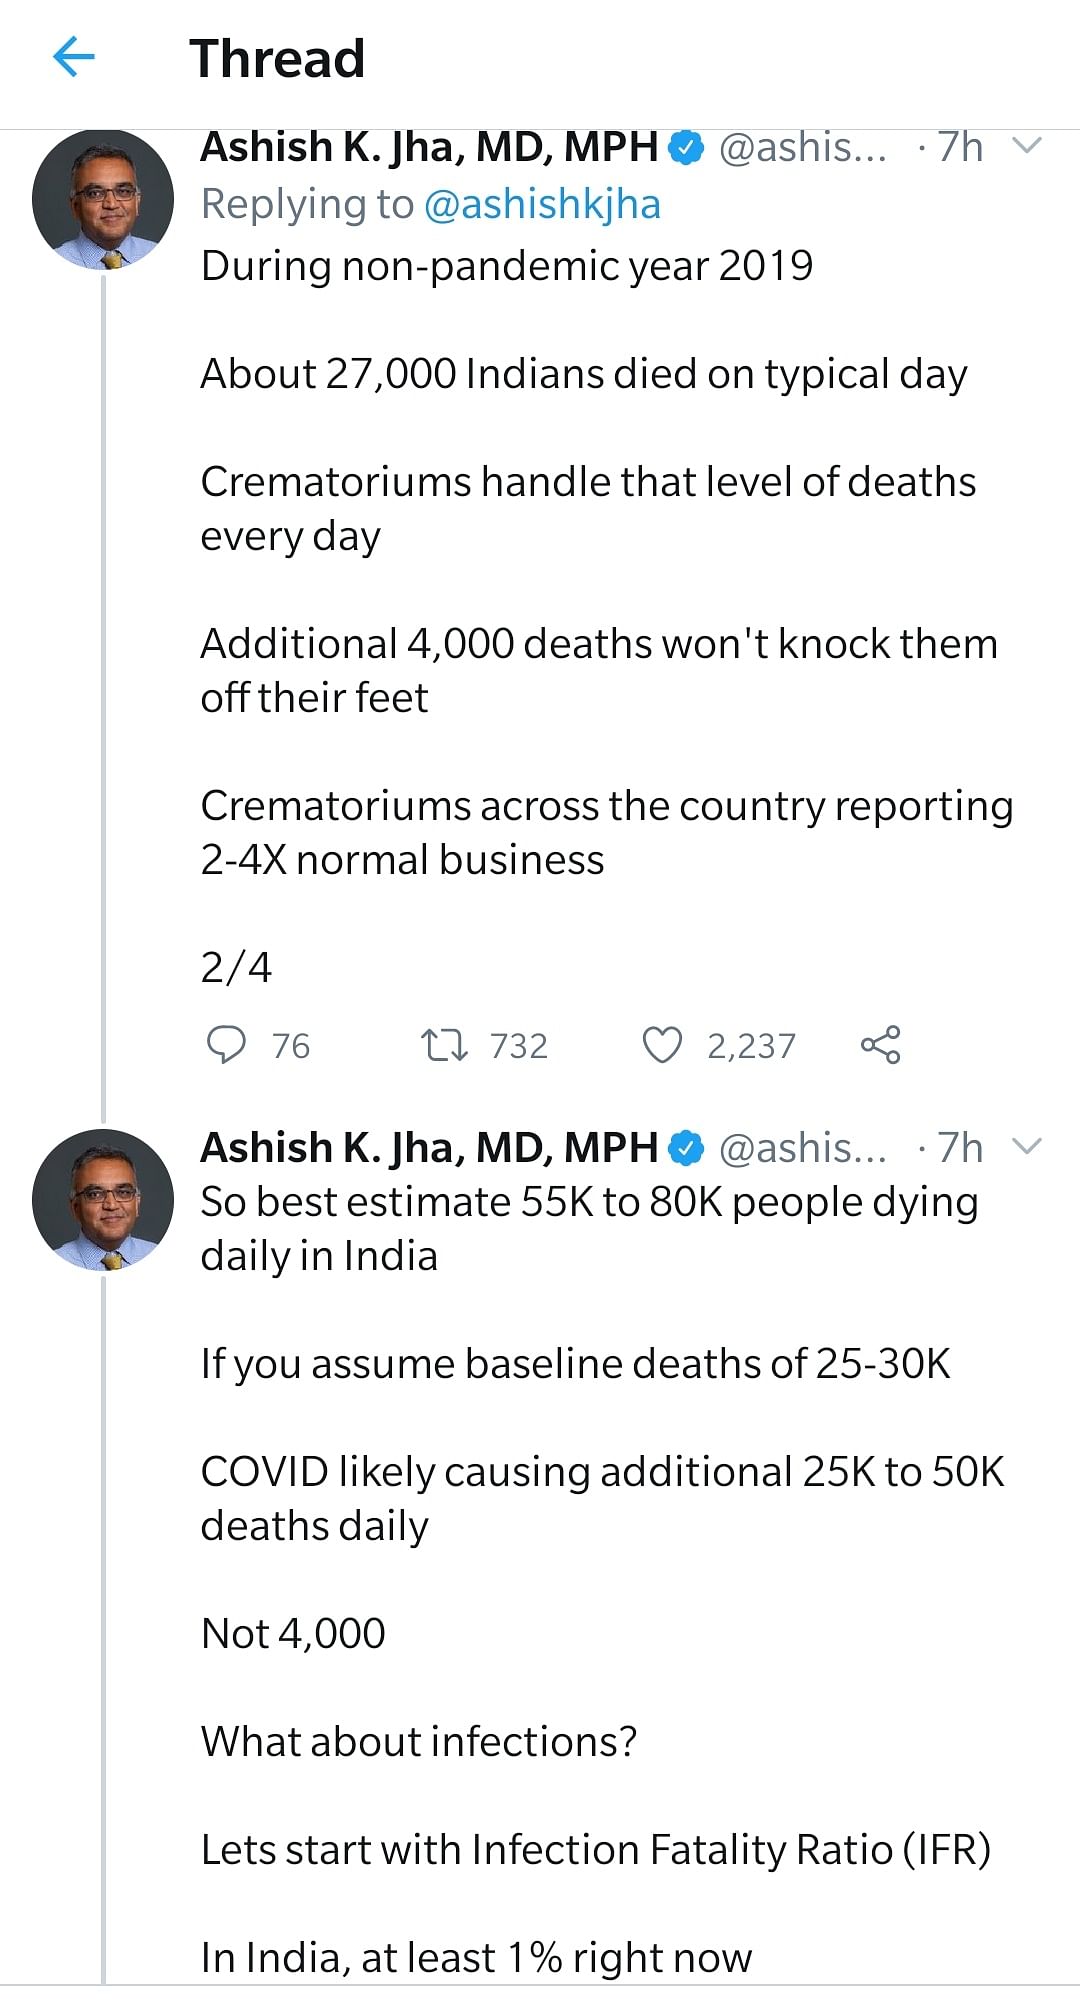 Dr Ashish K Jha